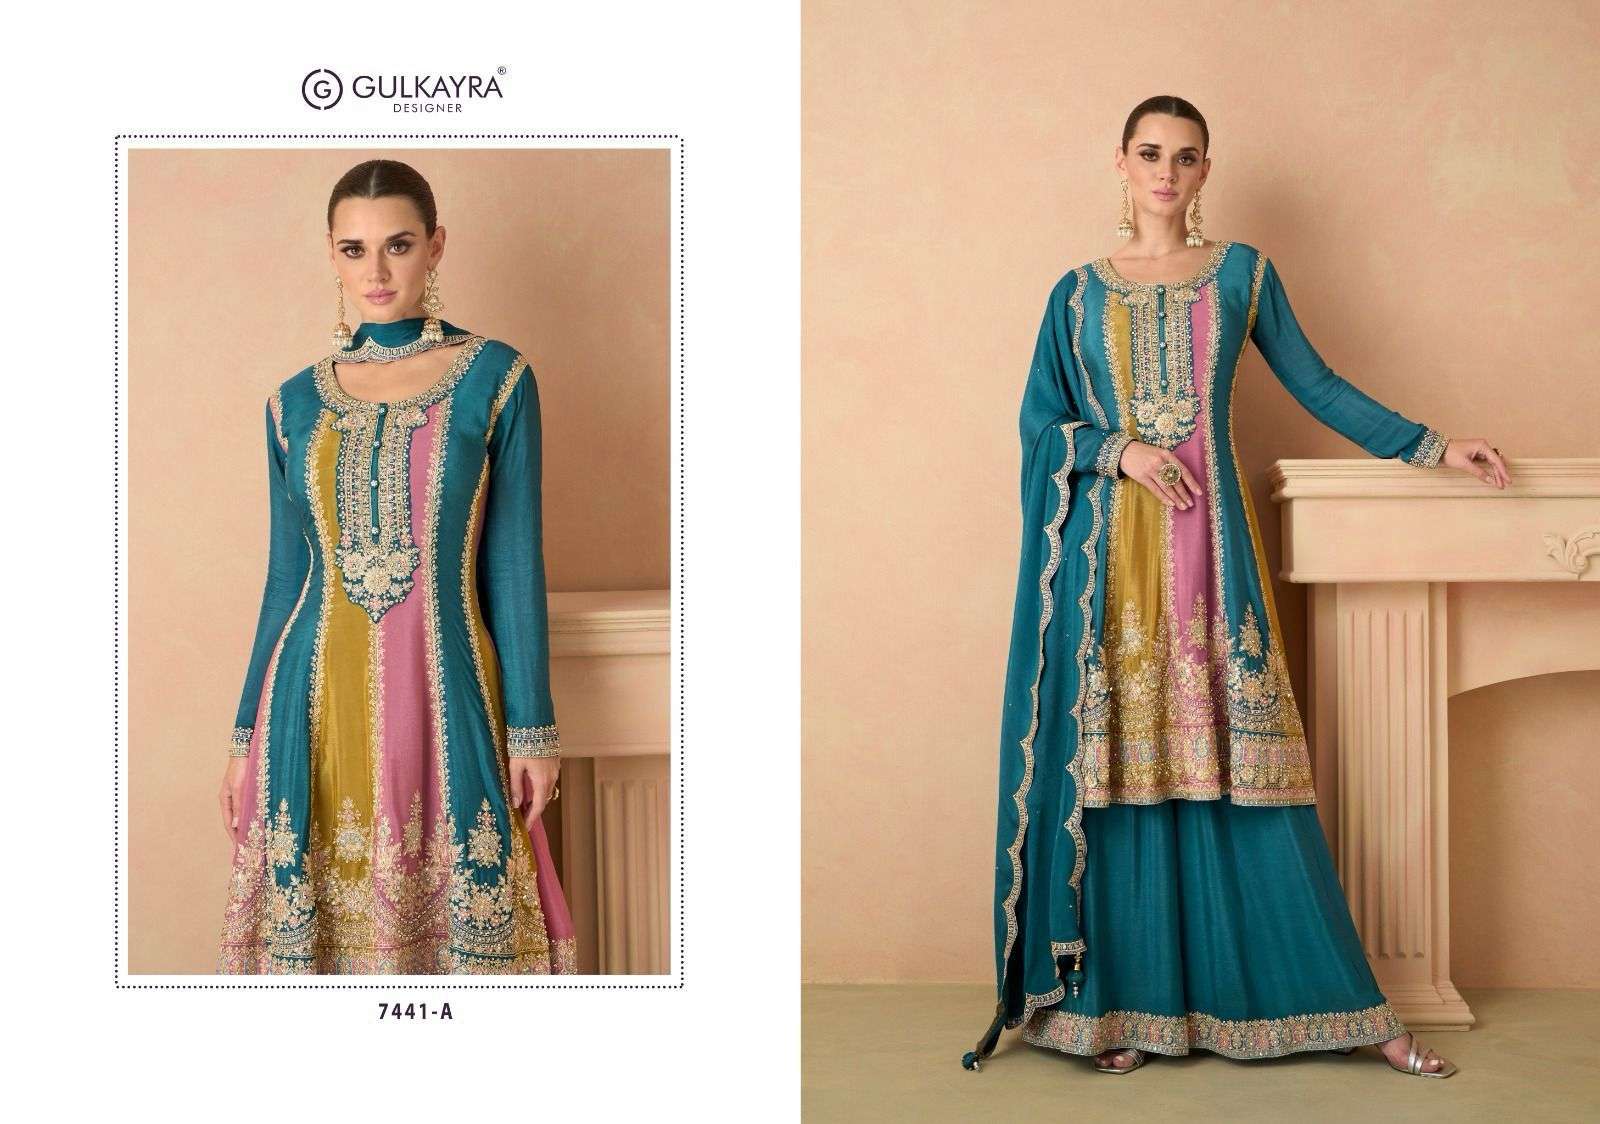 Gulkayra Izhar 7441 Colors Real Chinon Designer Salwar Suits Wholesale catalog